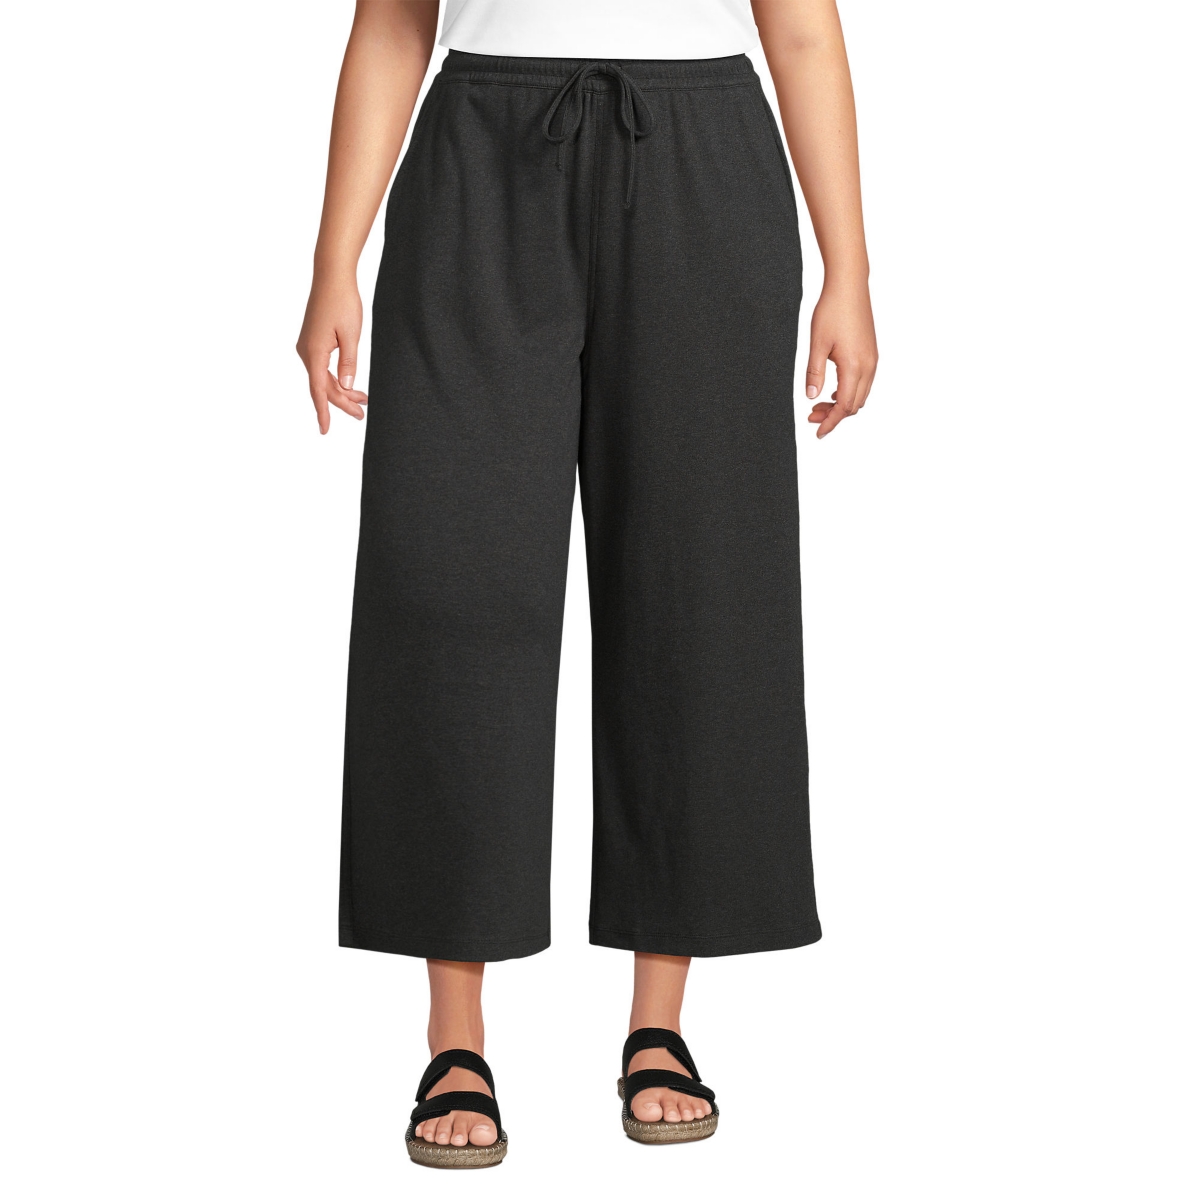 Women's Plus Size Sport Knit Elastic Waist Wide Leg Crop Pants - Dark charcoal heather